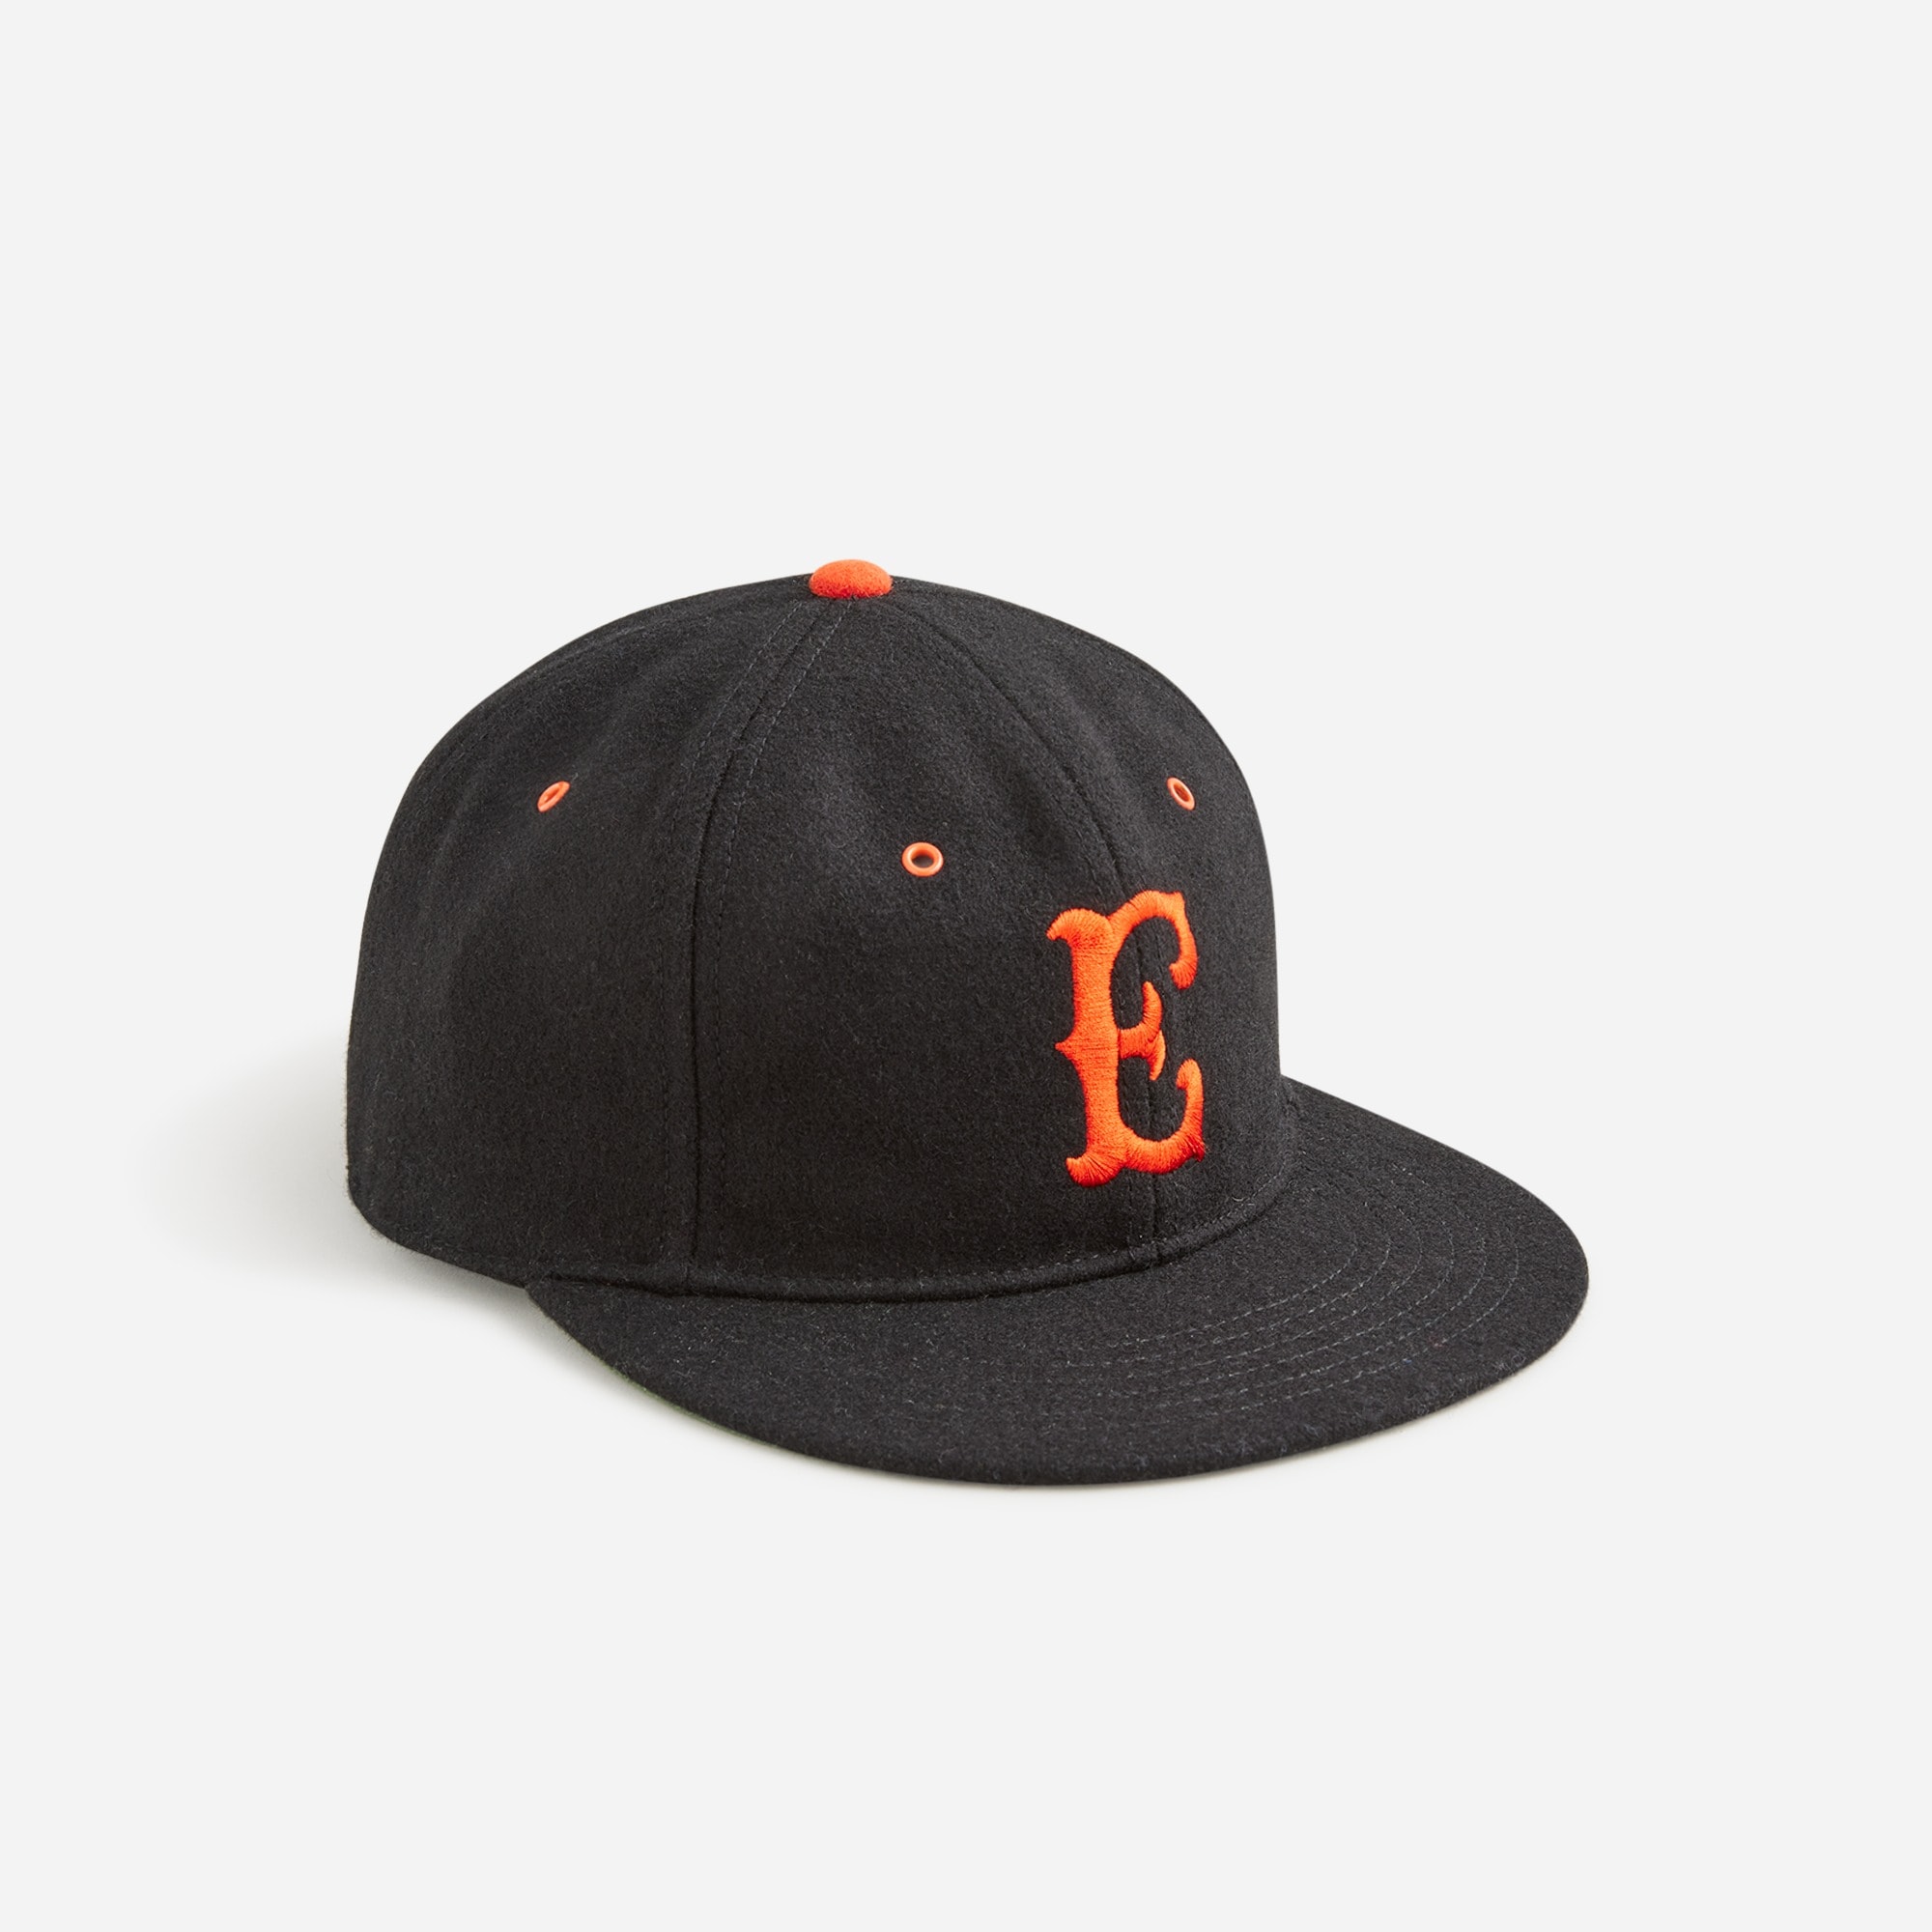  Heritage wool-blend letterman baseball cap